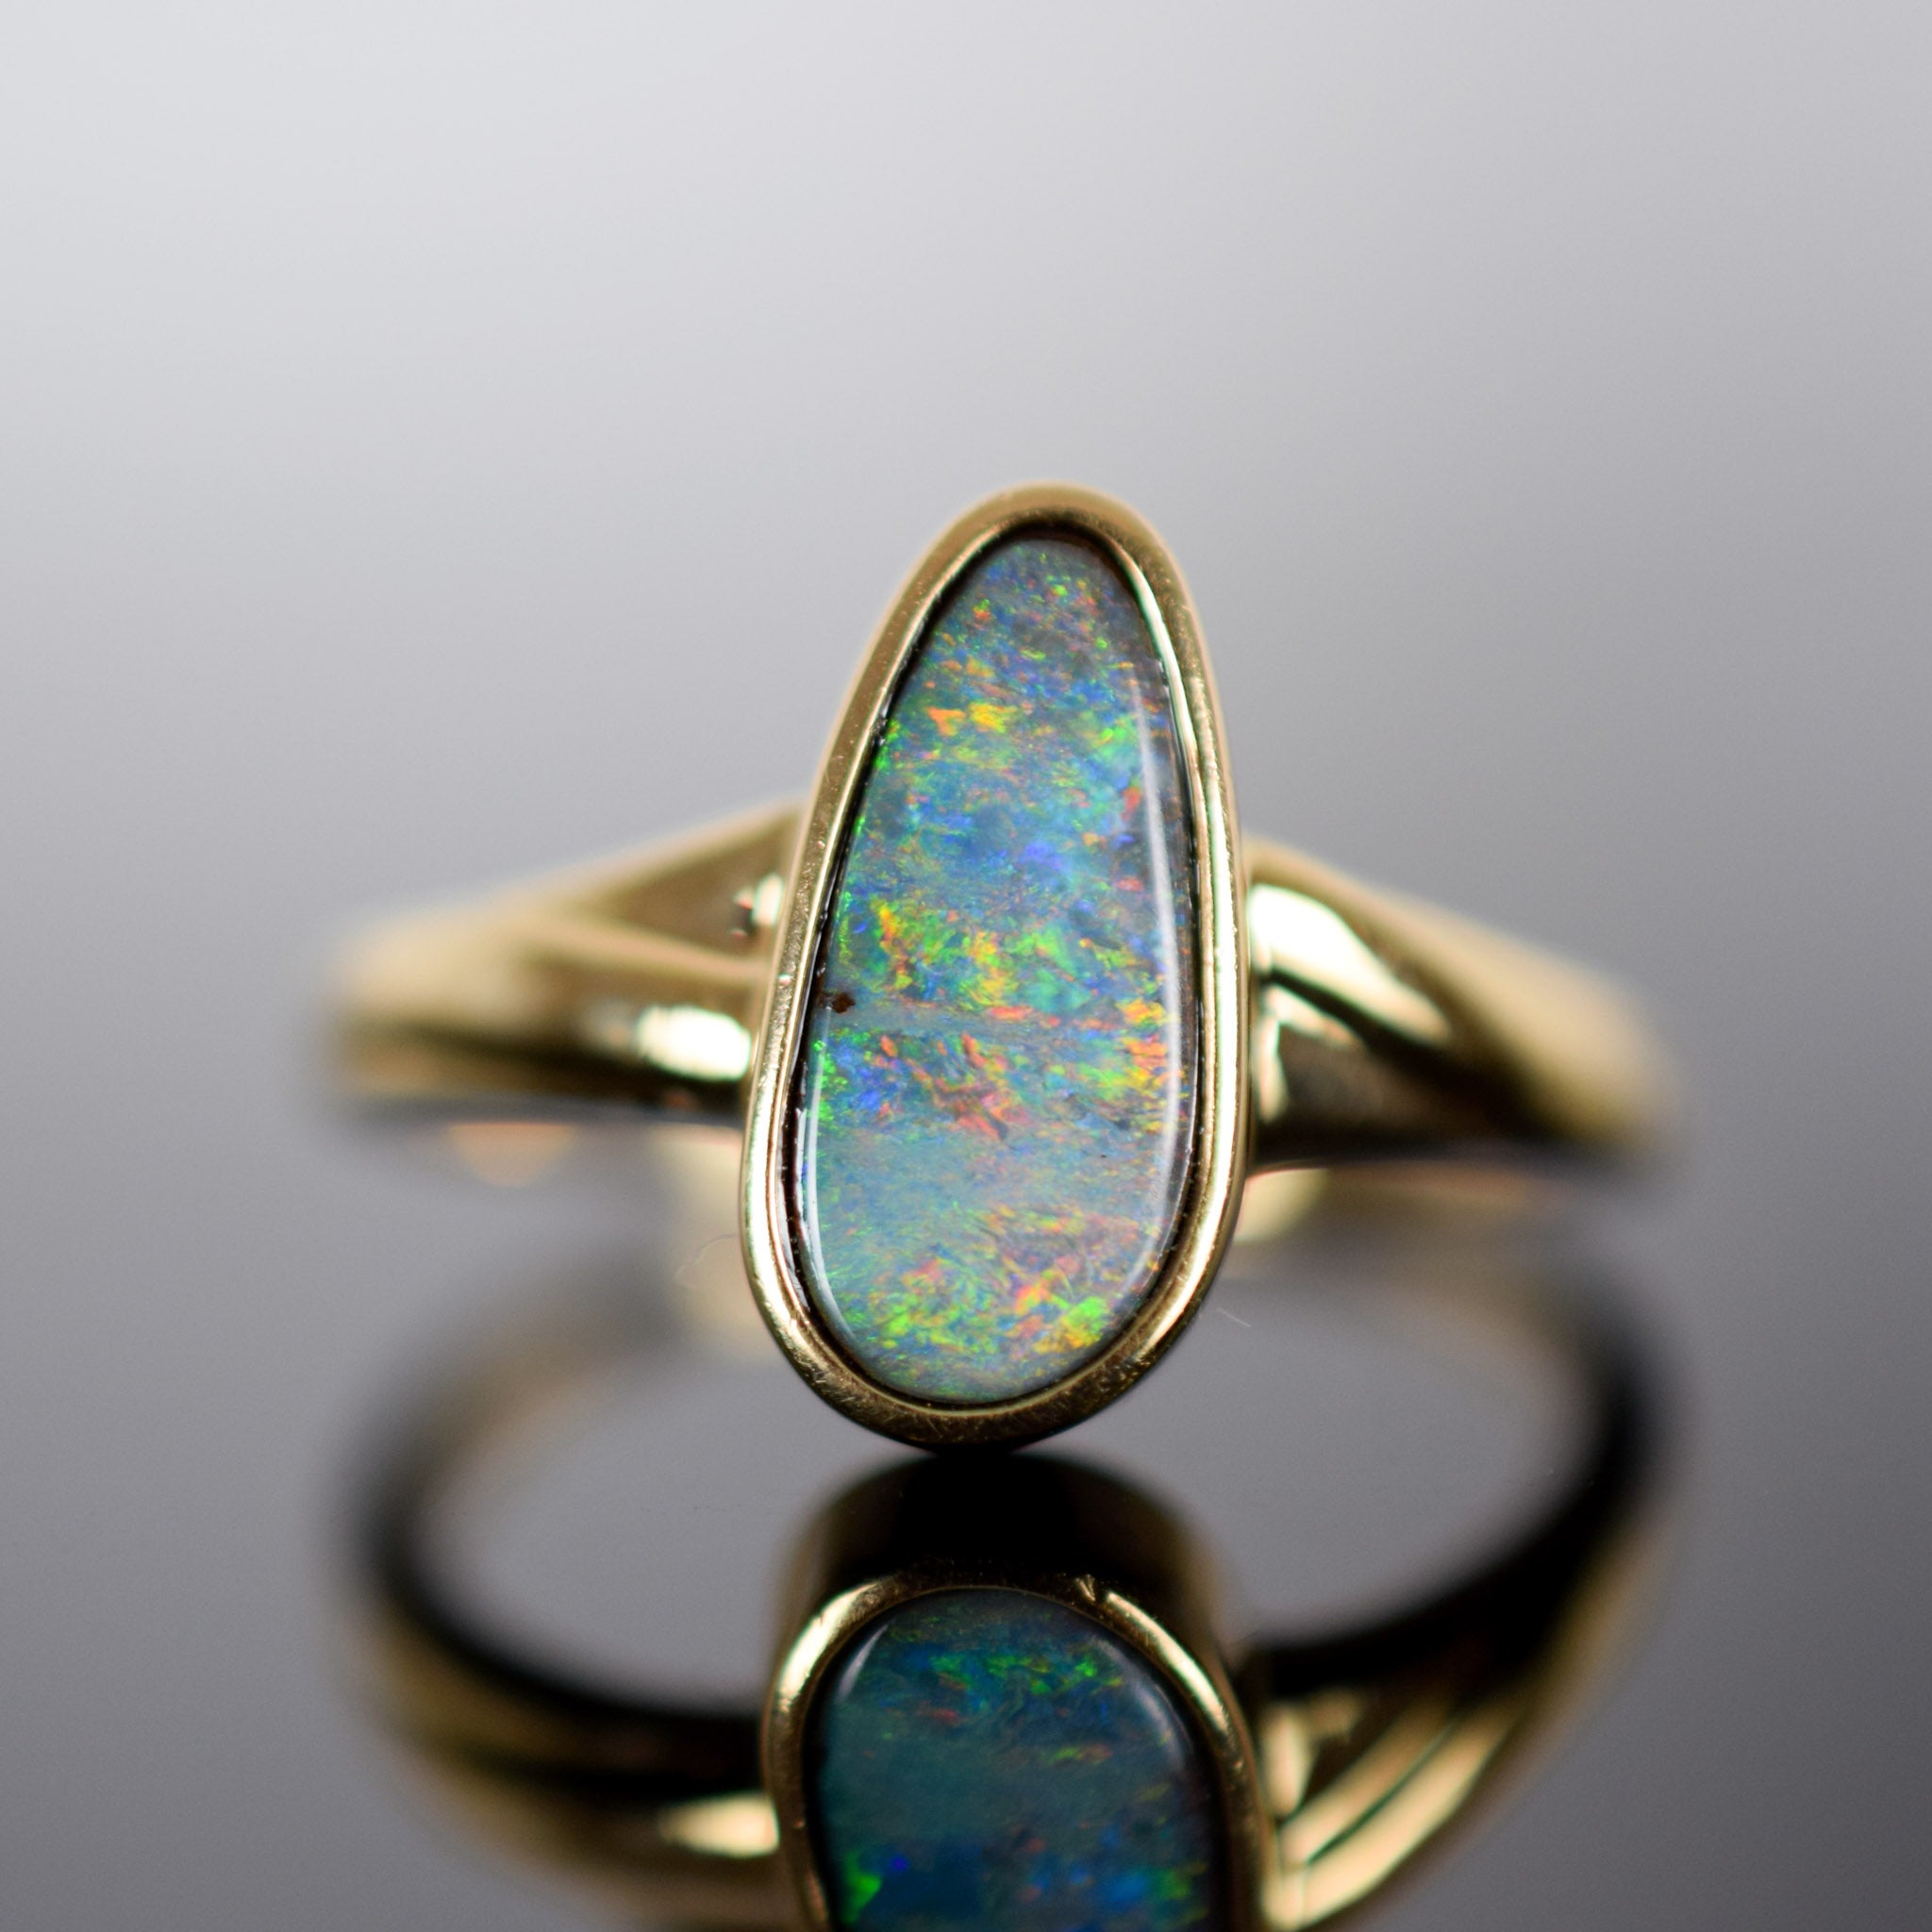 Unique opal ring for sale, folklor